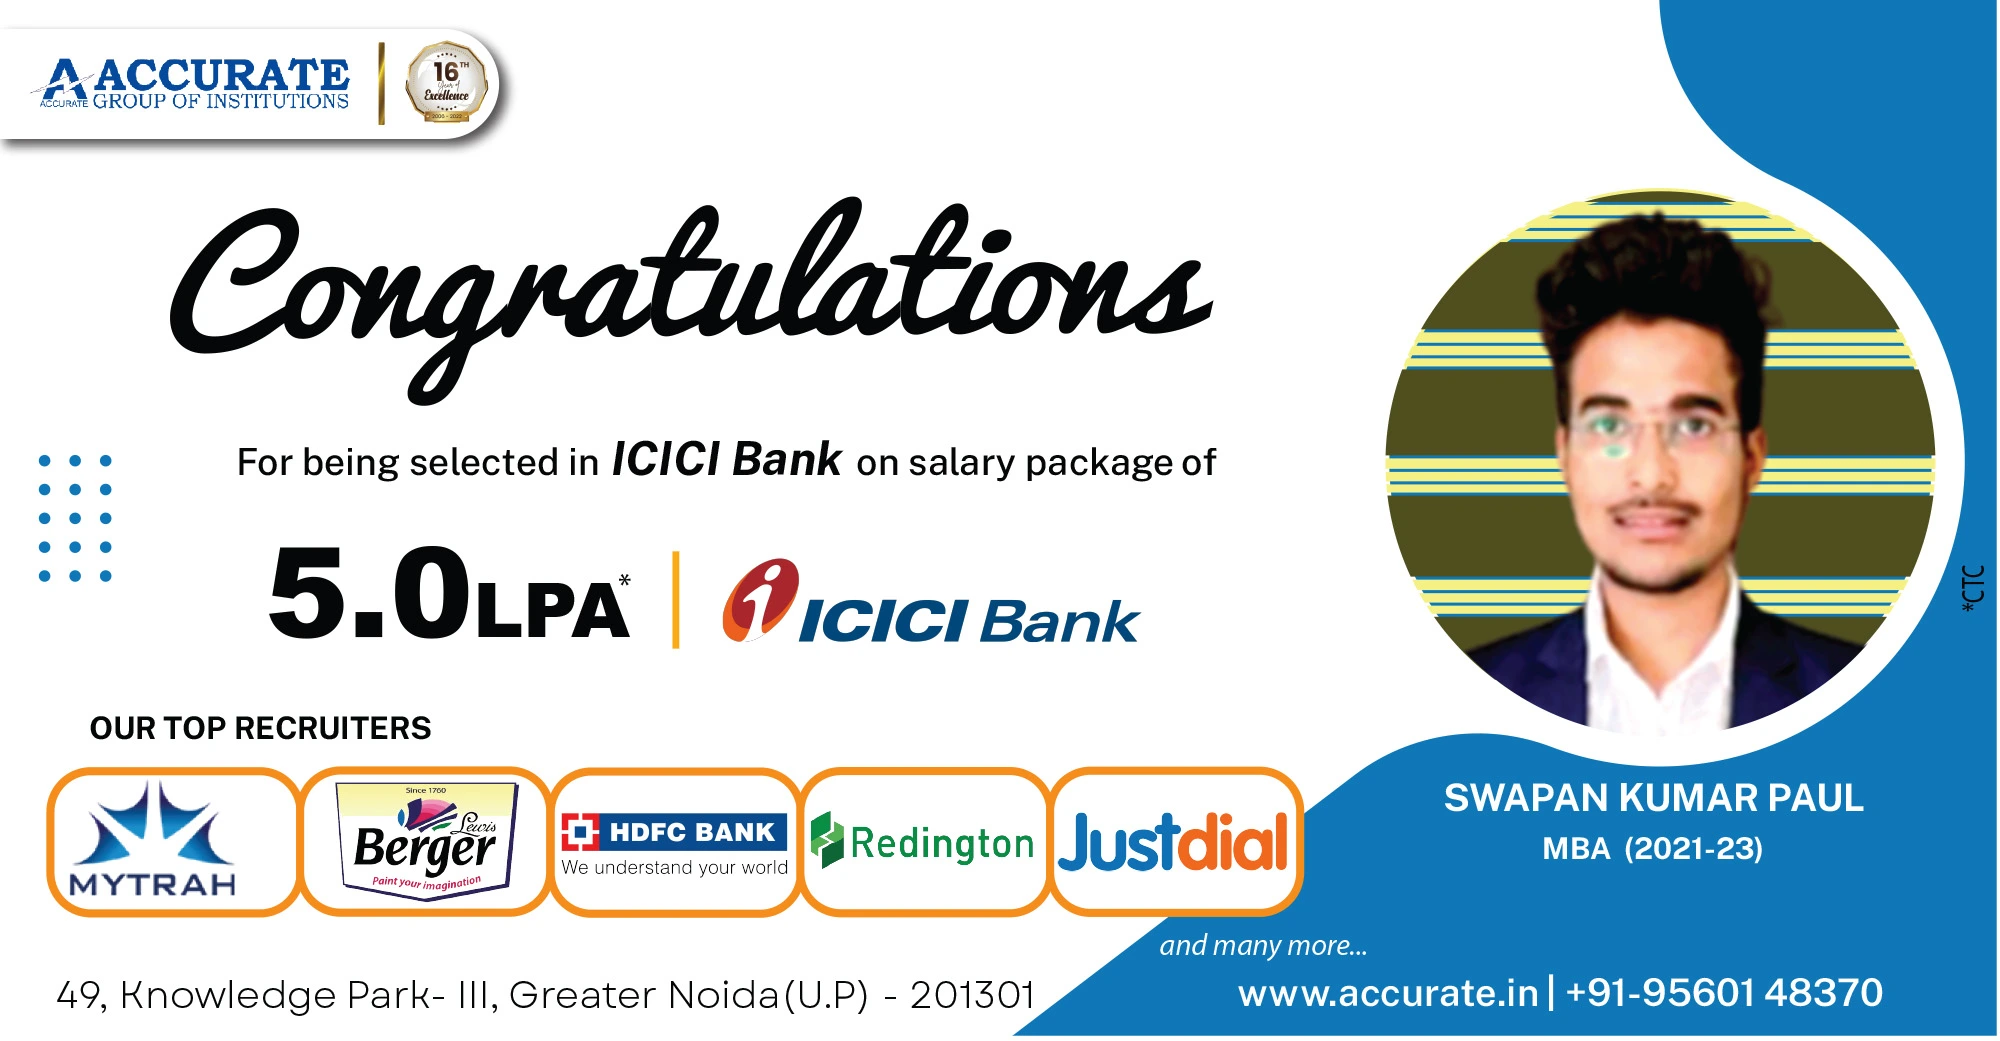 Swapan Kumar Paul | MBA Student Selected by ICICI Bank